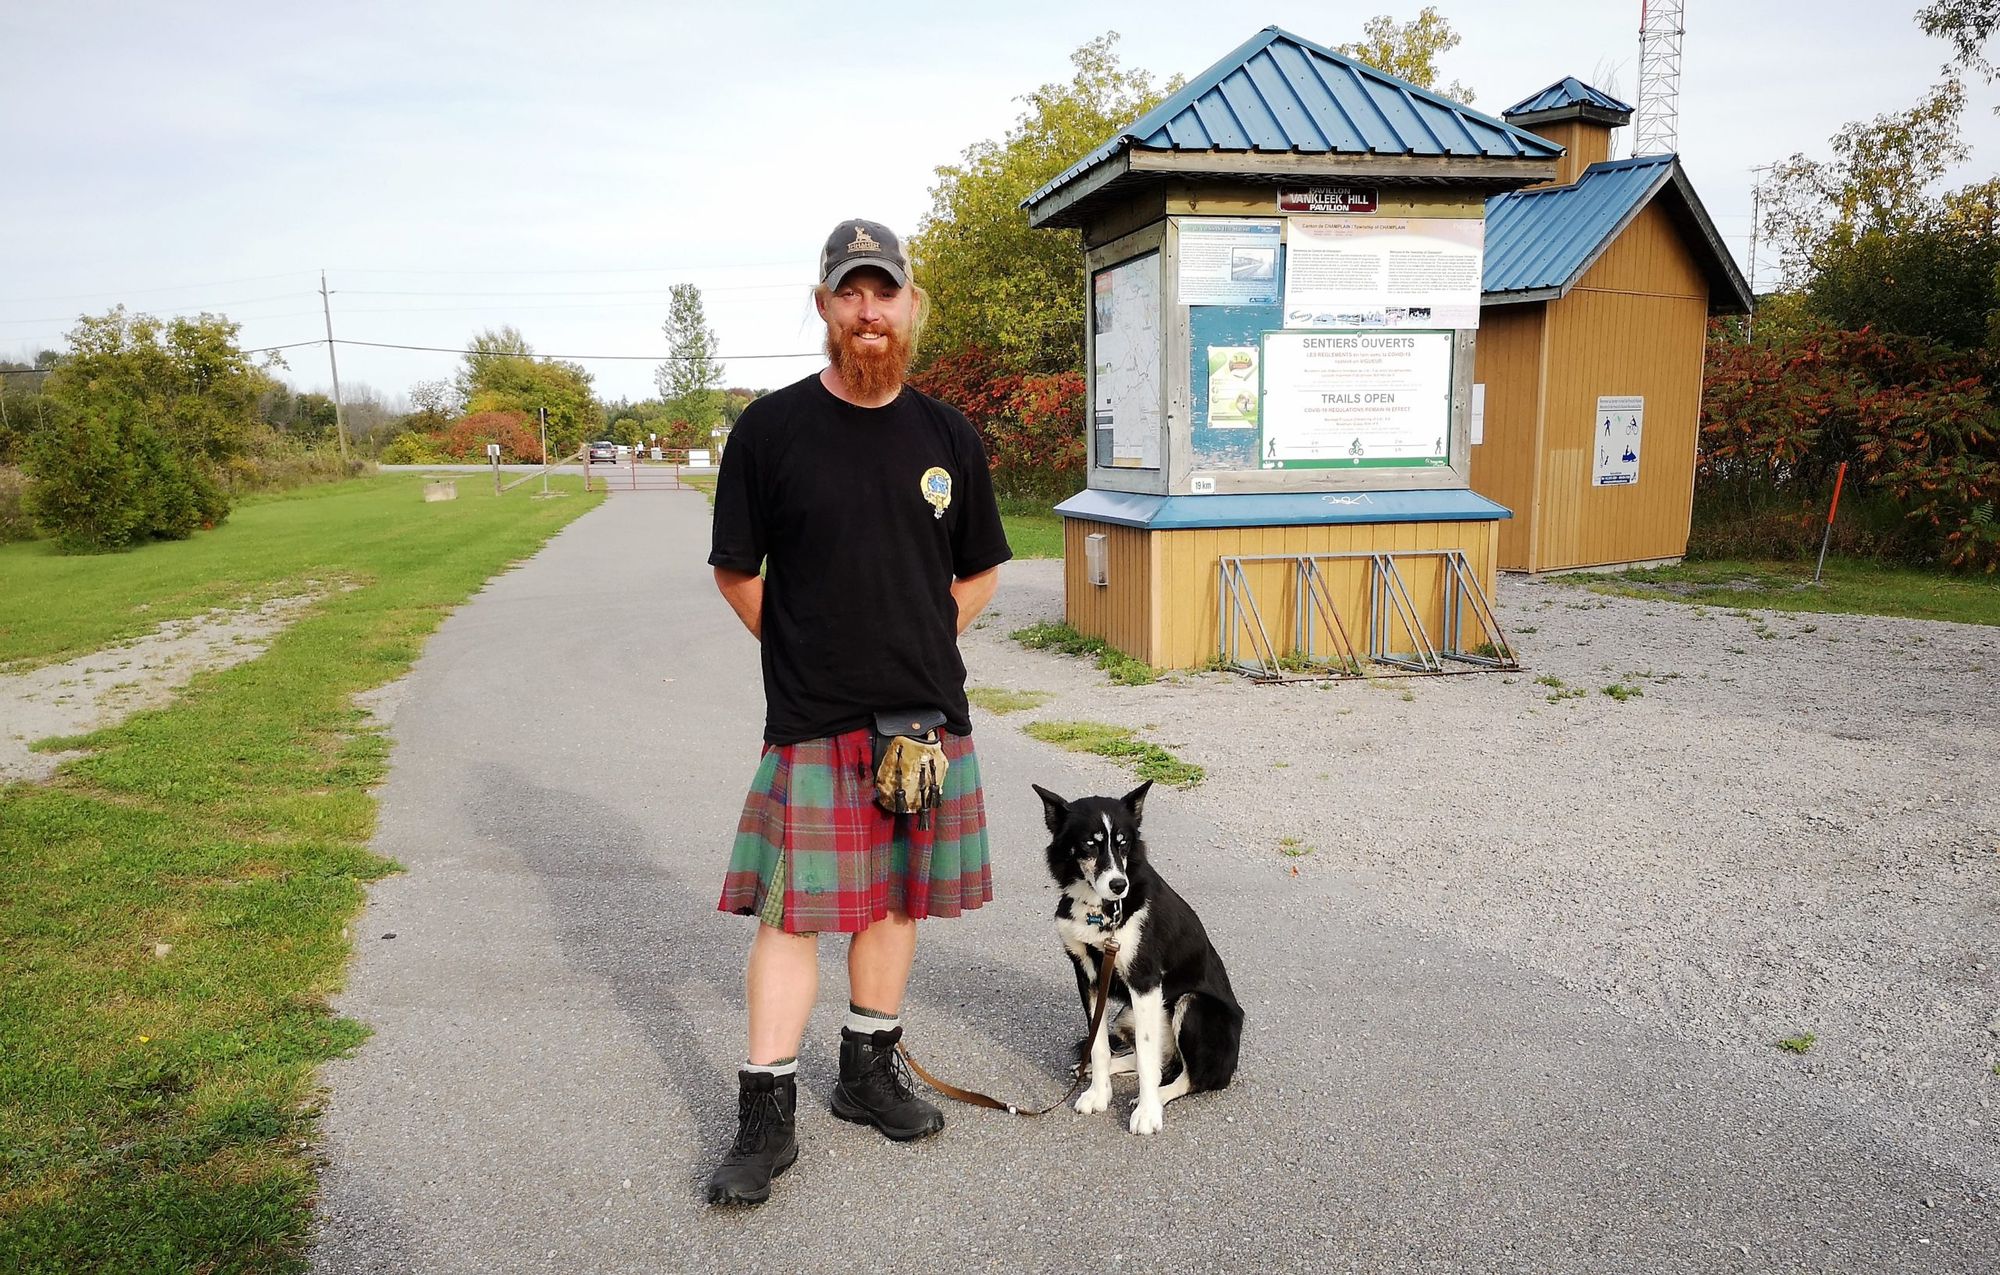 Scottish adventurer walking across Canada with his dog visits region